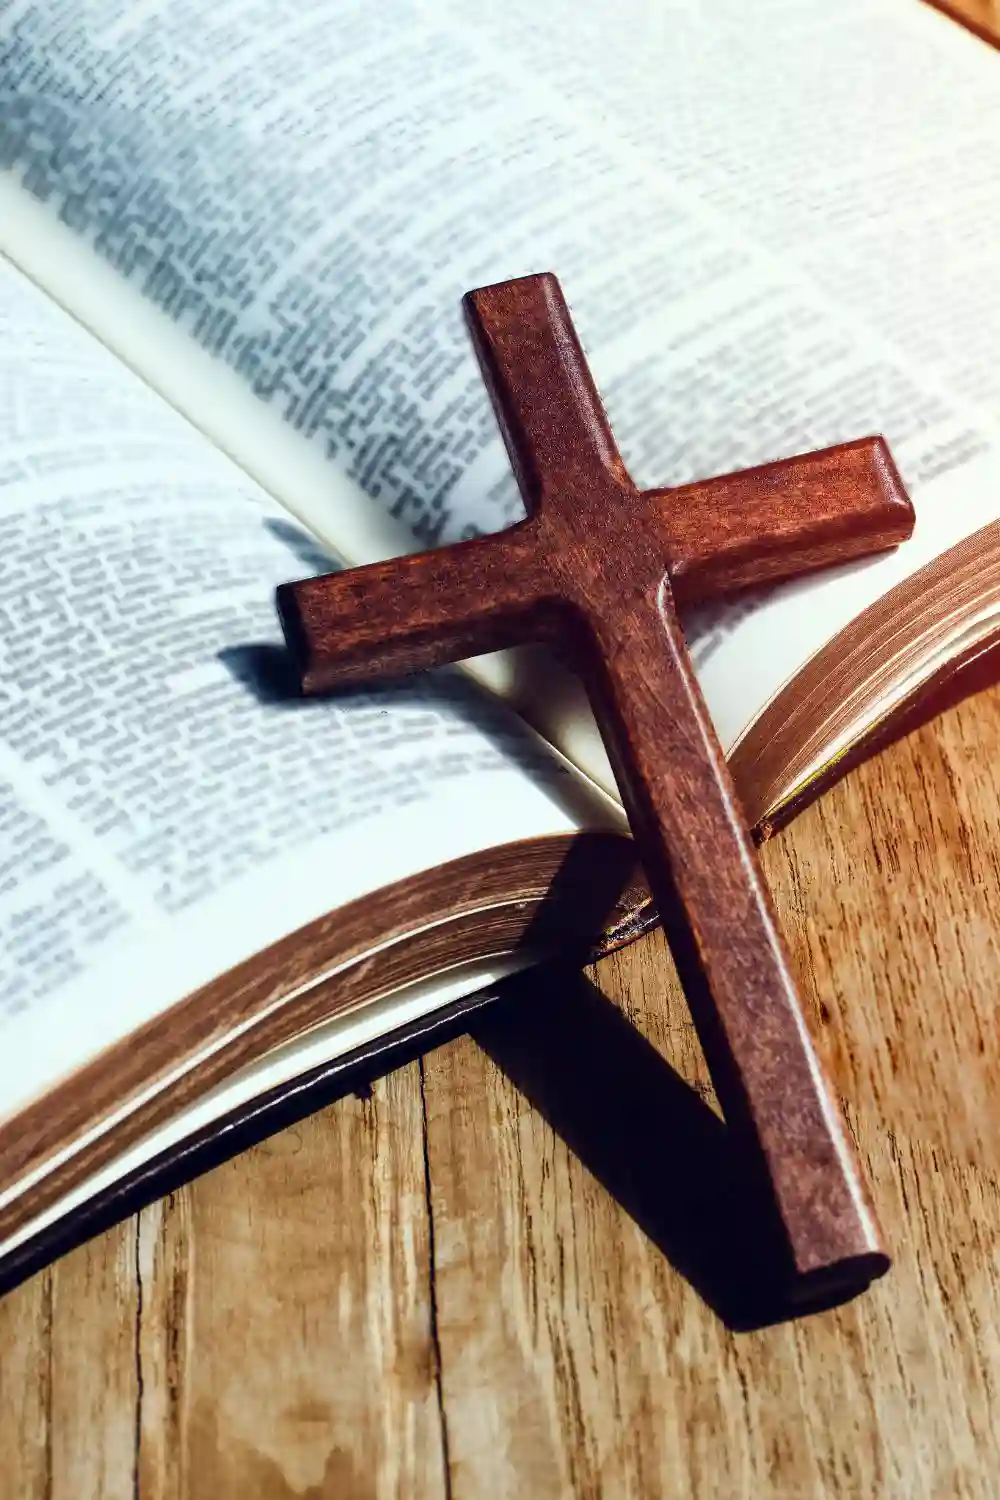 Christian Cross and Bible